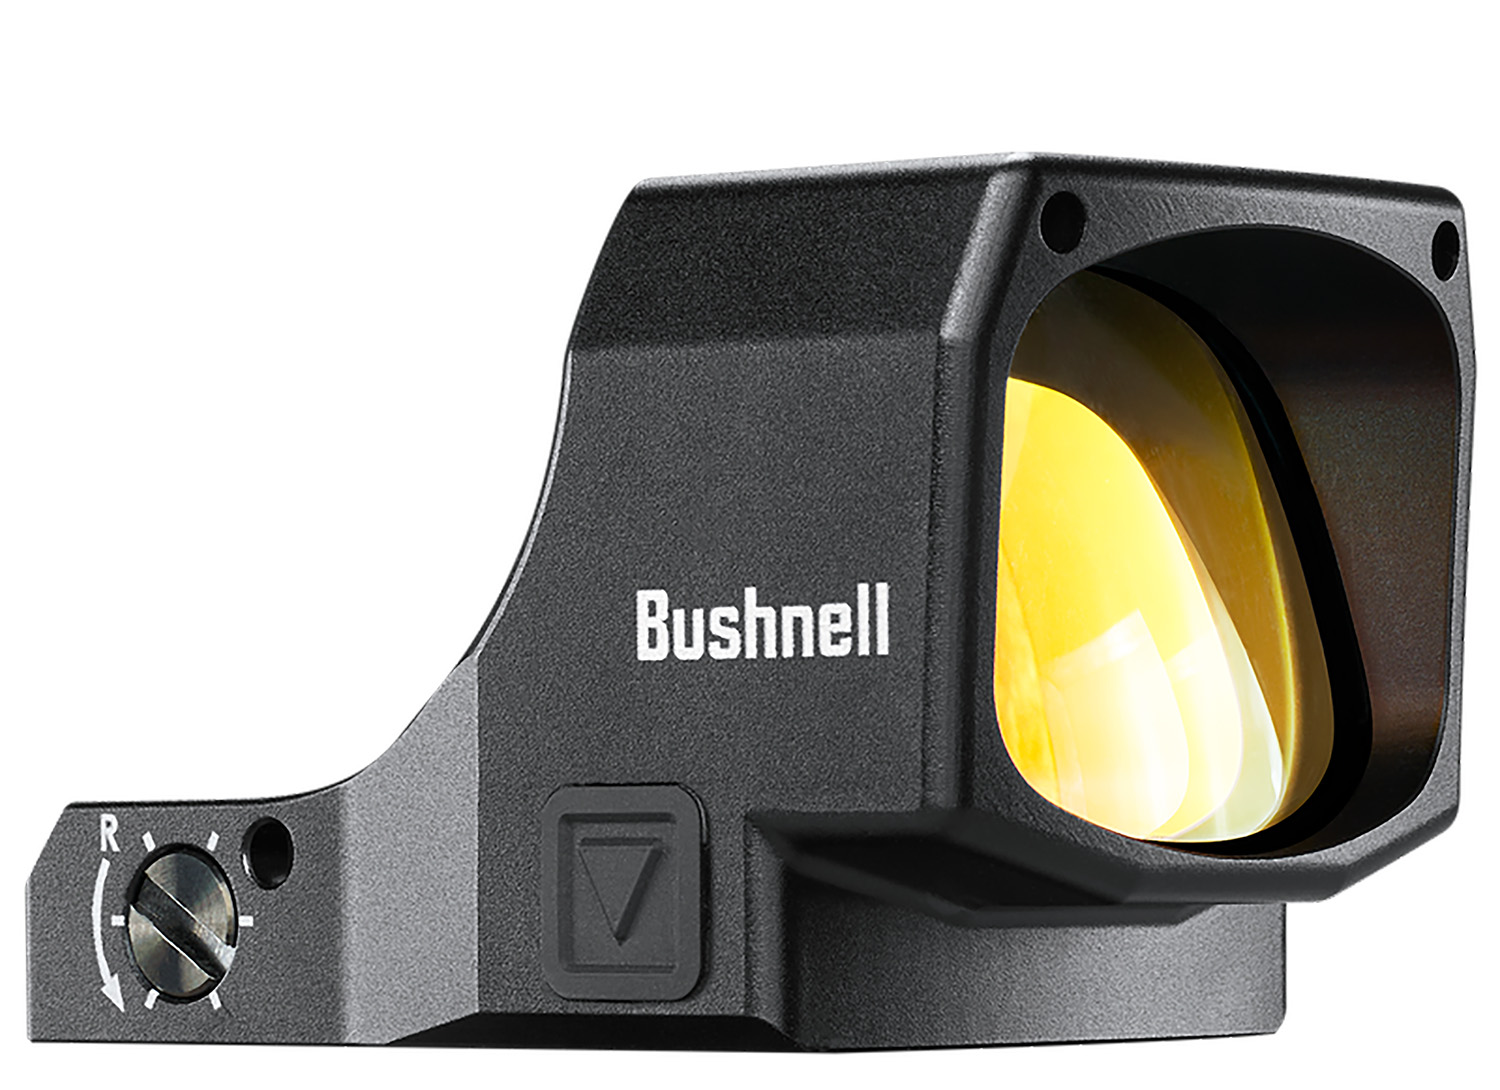 Bushnell RXM300 RXM-300 Reflex Sight Black 1 X 28mm 4 MOA Red Dot Reticle